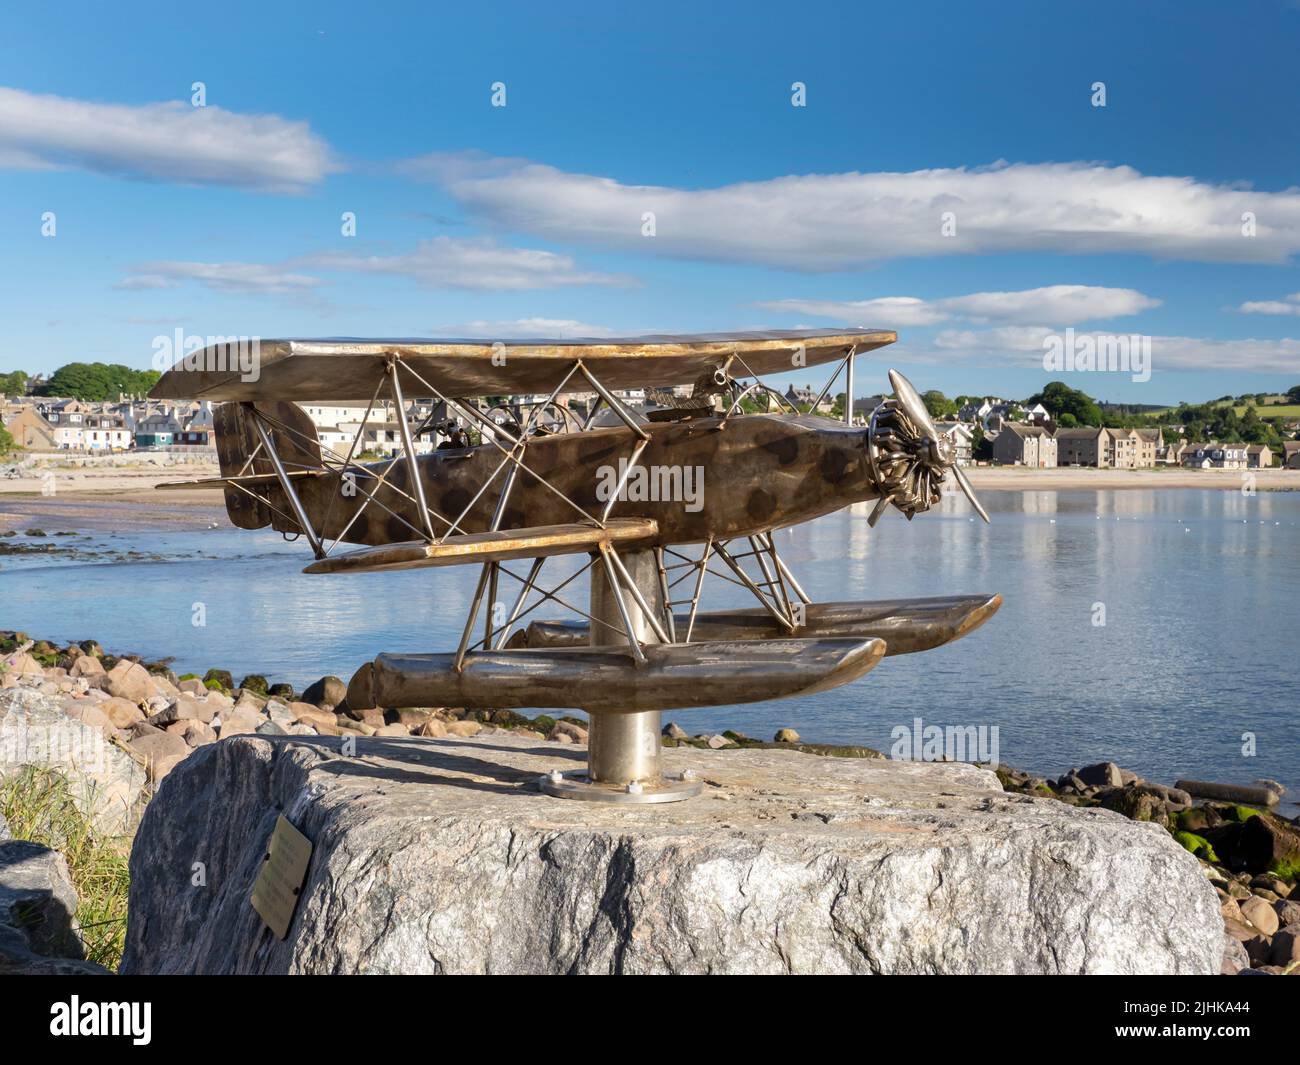 A Norwegian biplane sculpture in Stonehaven in NE Scotland, UK. Stock Photo